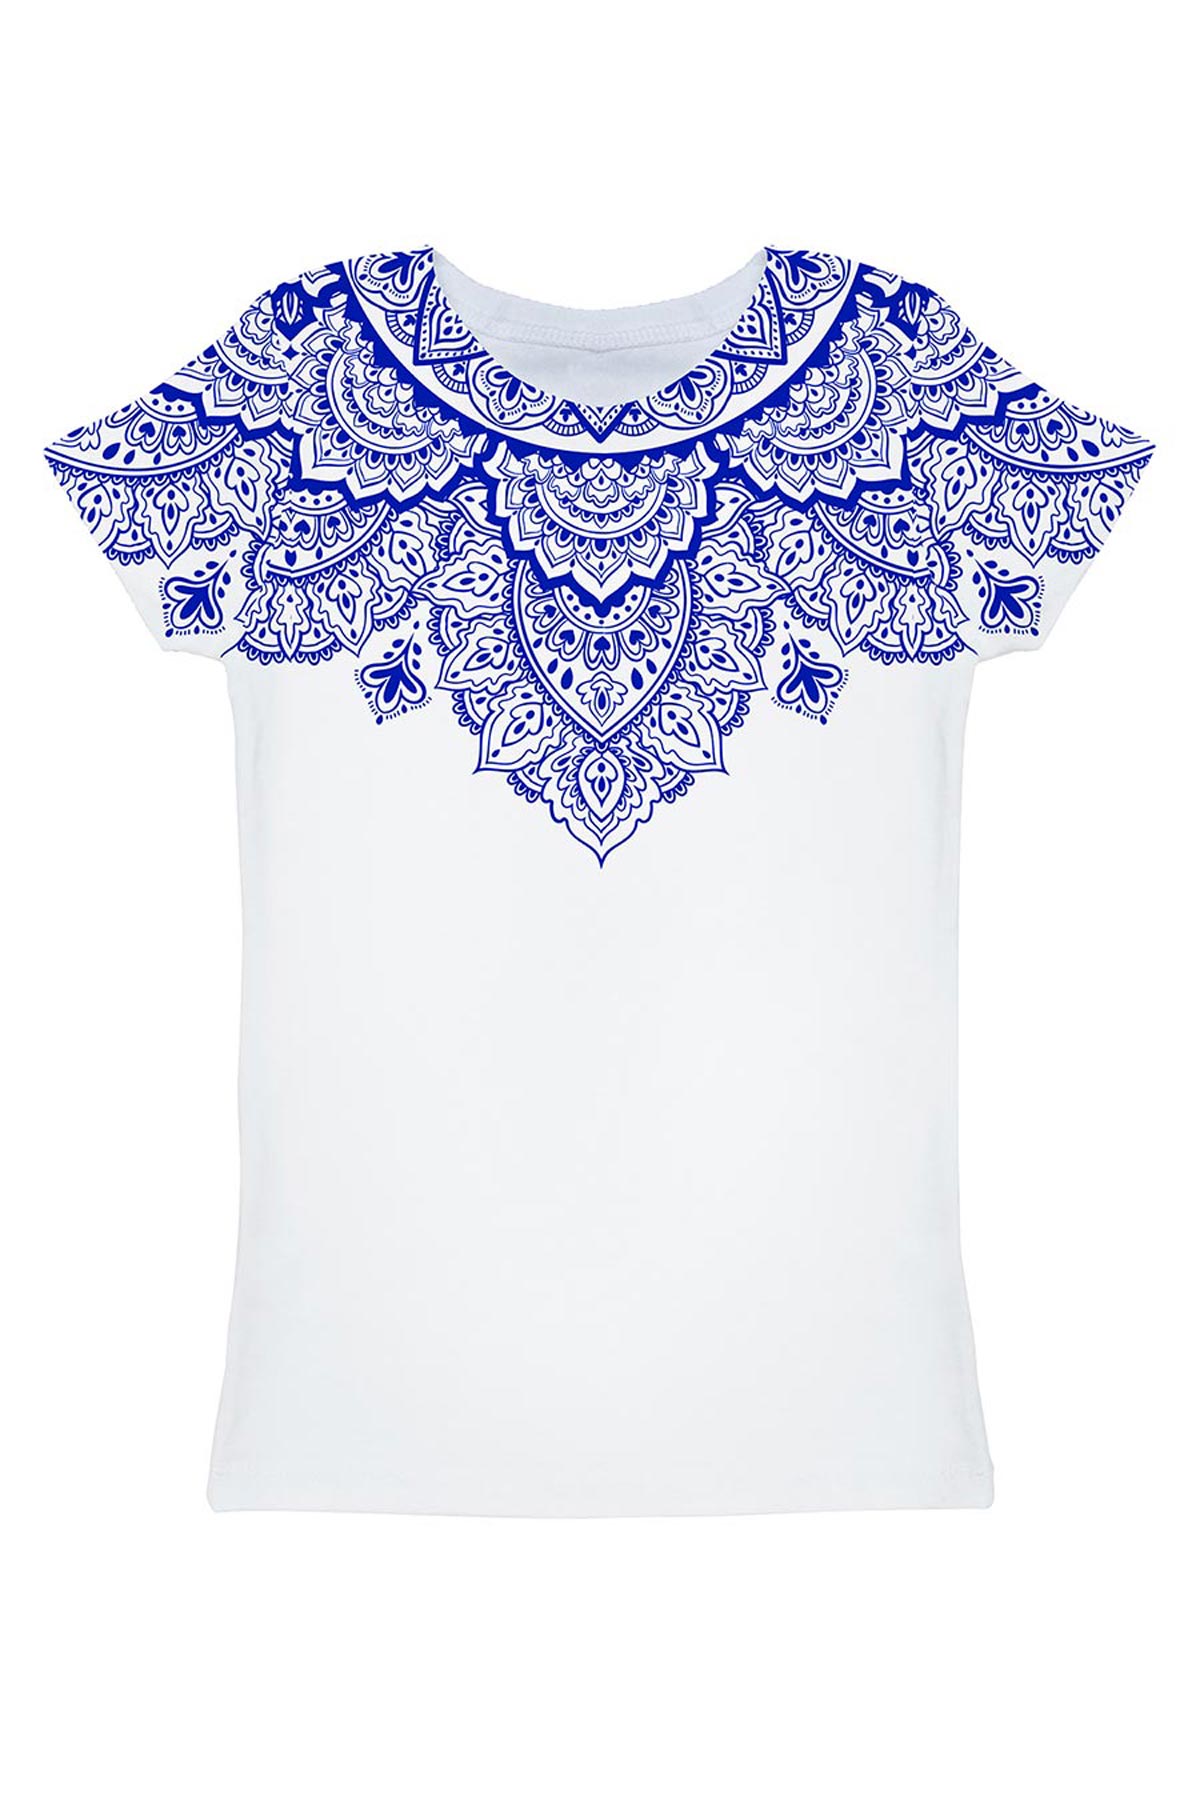 Nirvana Zoe White & Blue Geometric Boho Print T-Shirt - Women - Pineapple Clothing